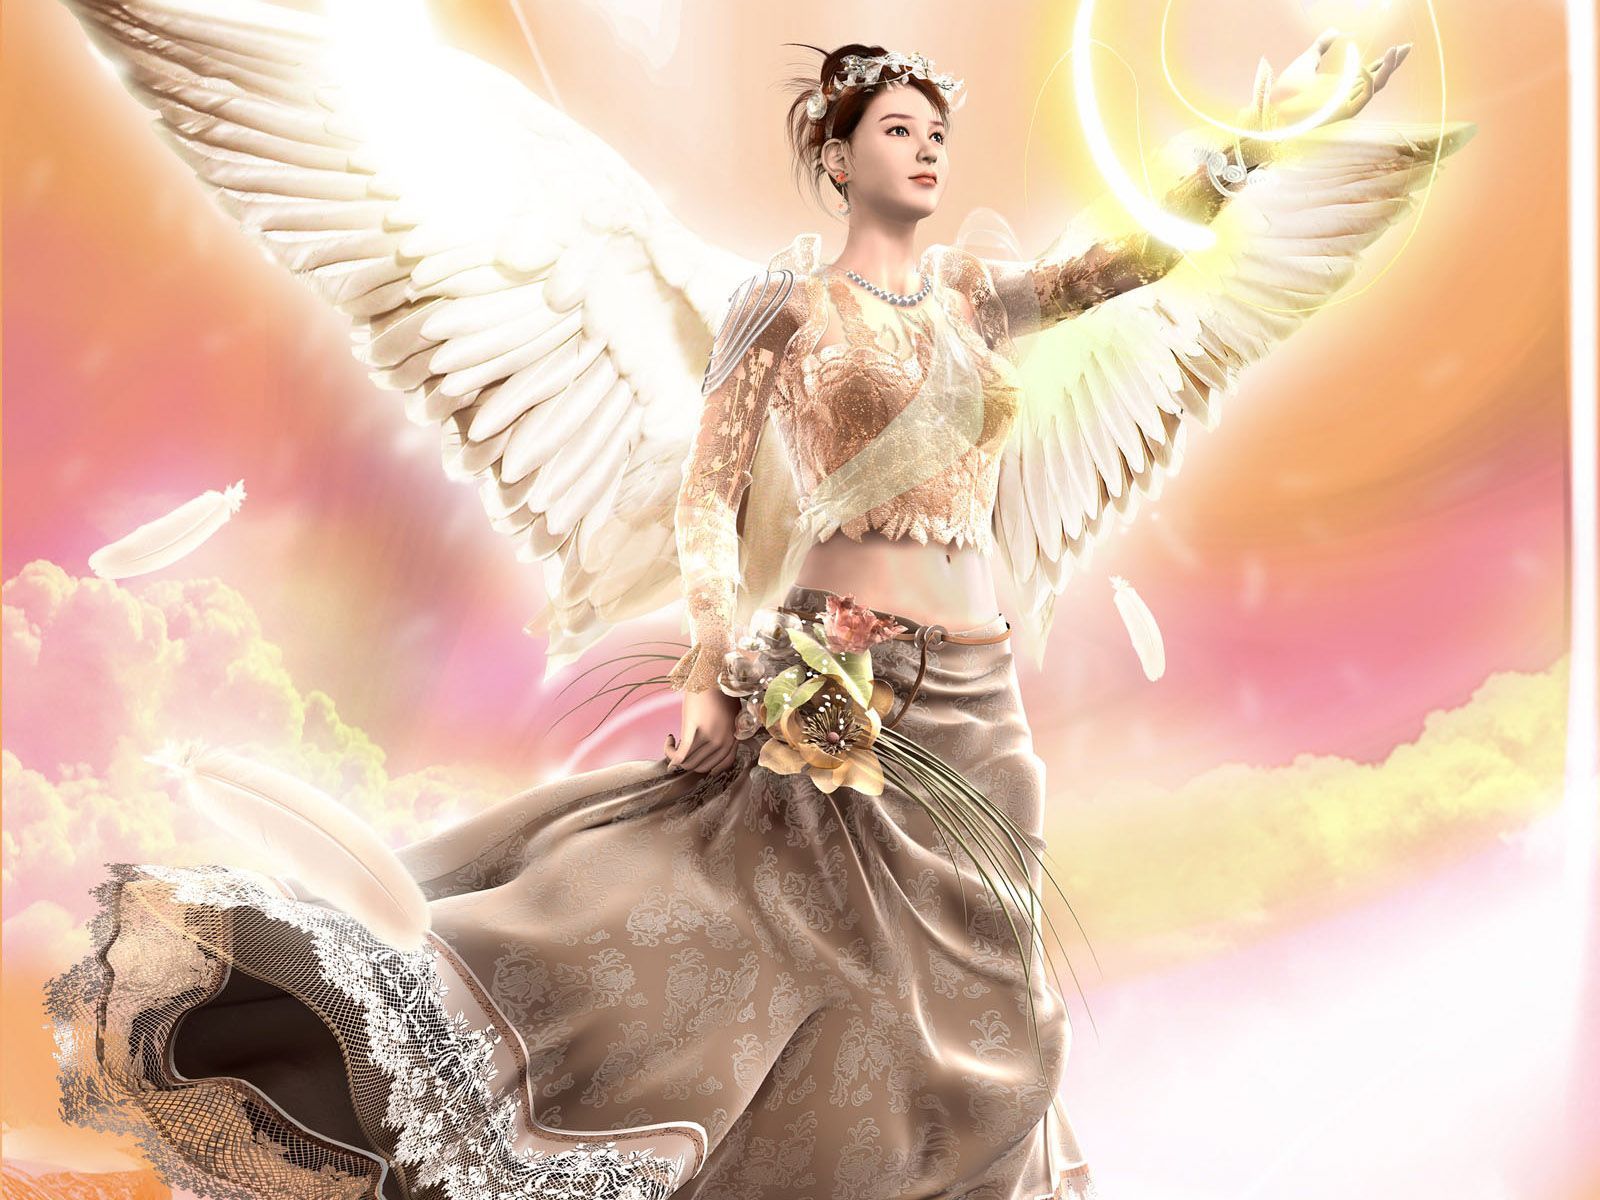 Beautiful Angels wallpapers | PIXHOME